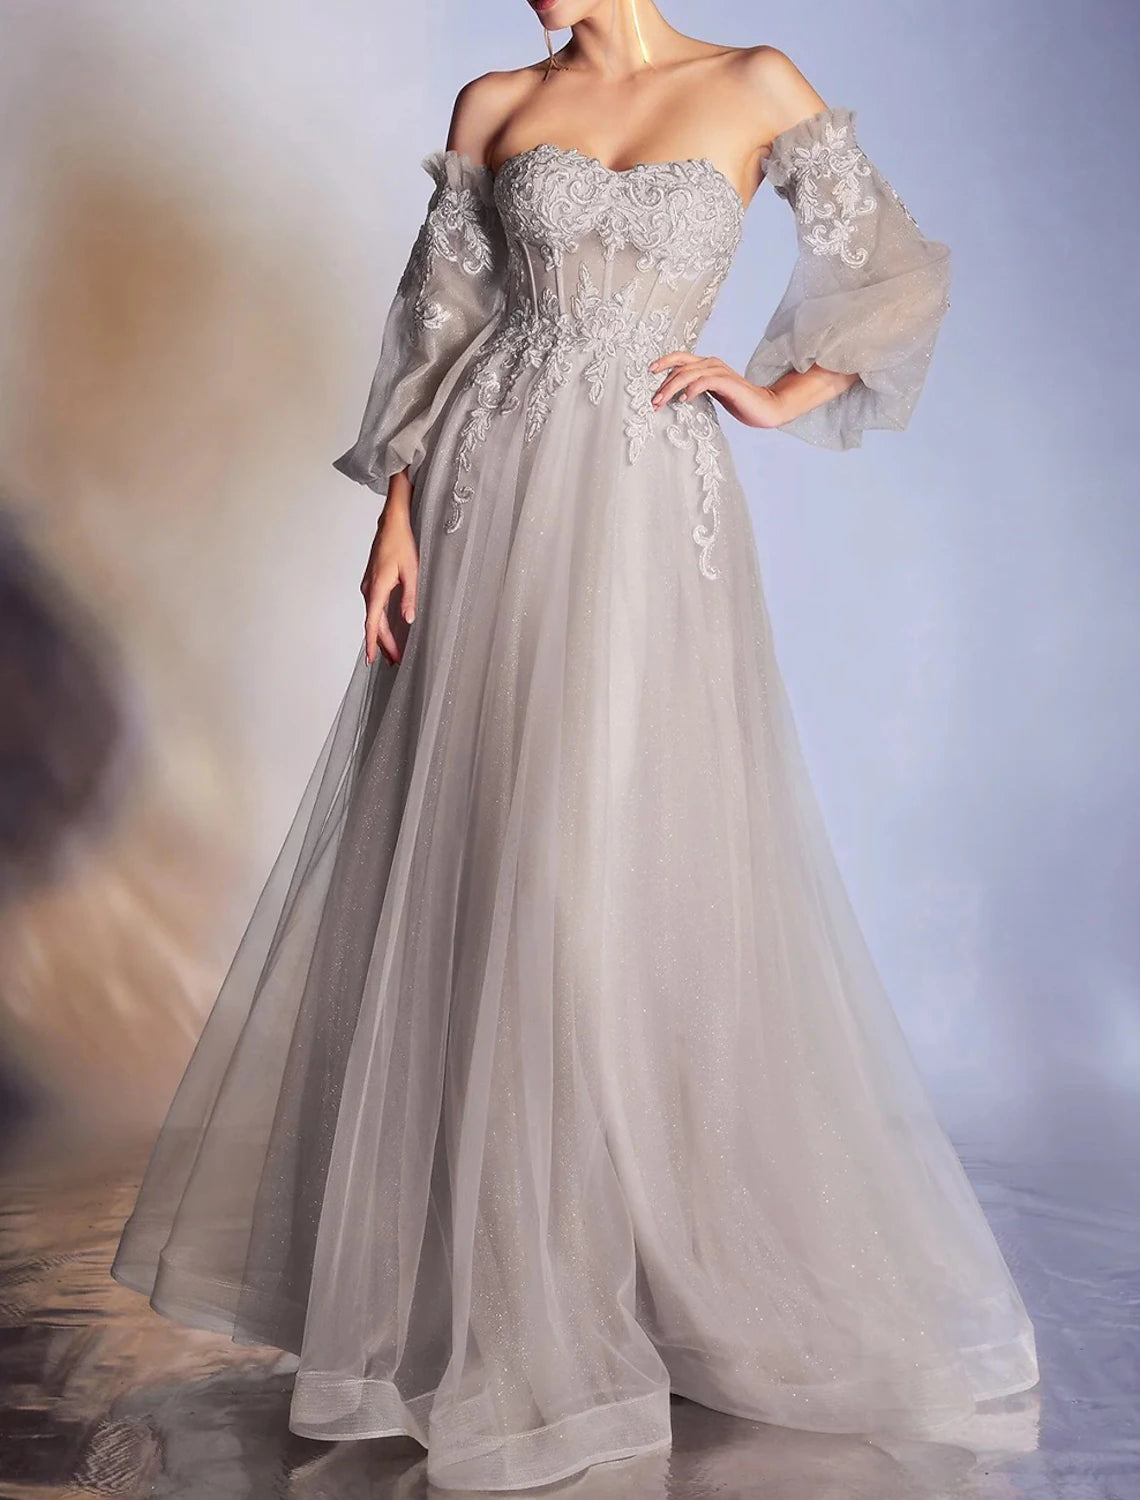 A-Line Prom Dresses Elegant Dress Formal Prom Floor Length 3/4 Length Sleeve Off Shoulder Lace Backless with Appliques